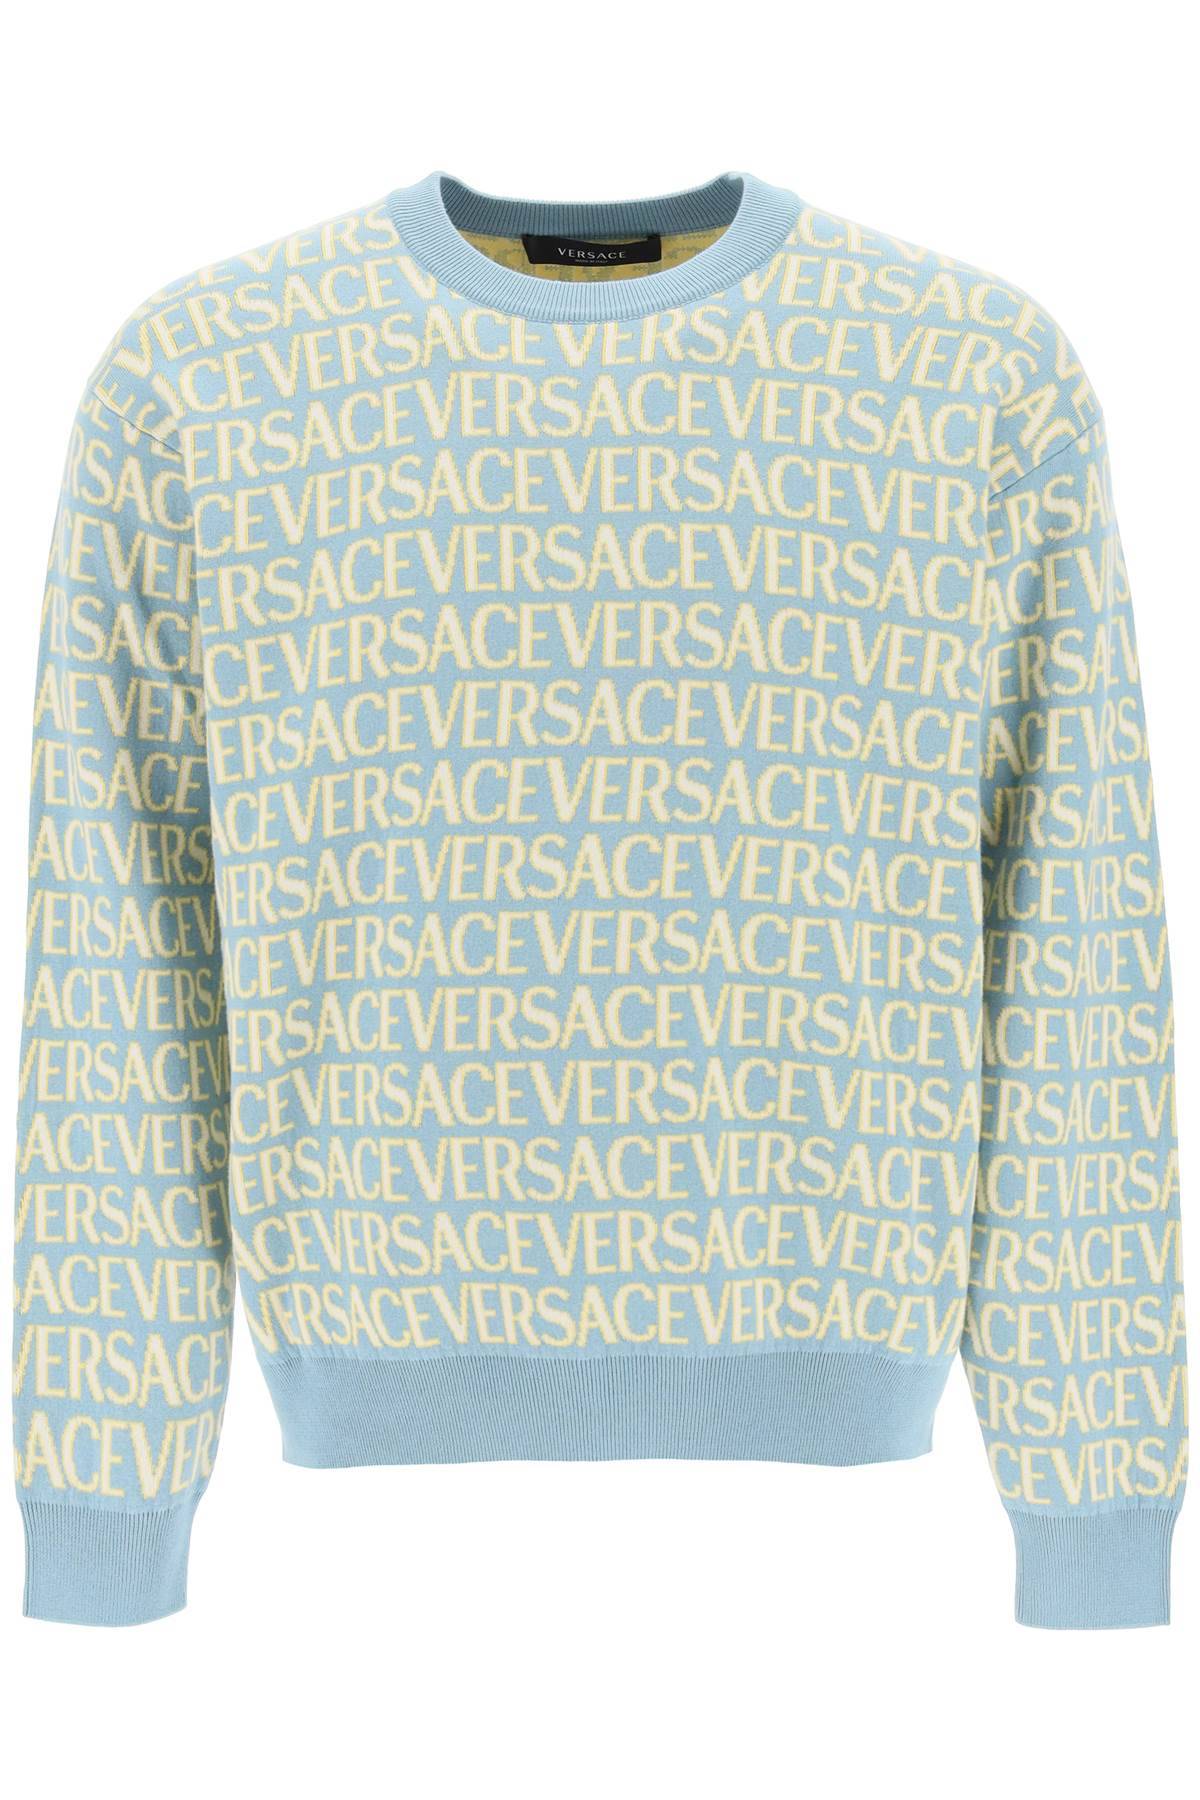 Versace VERSACE monogram cotton sweater